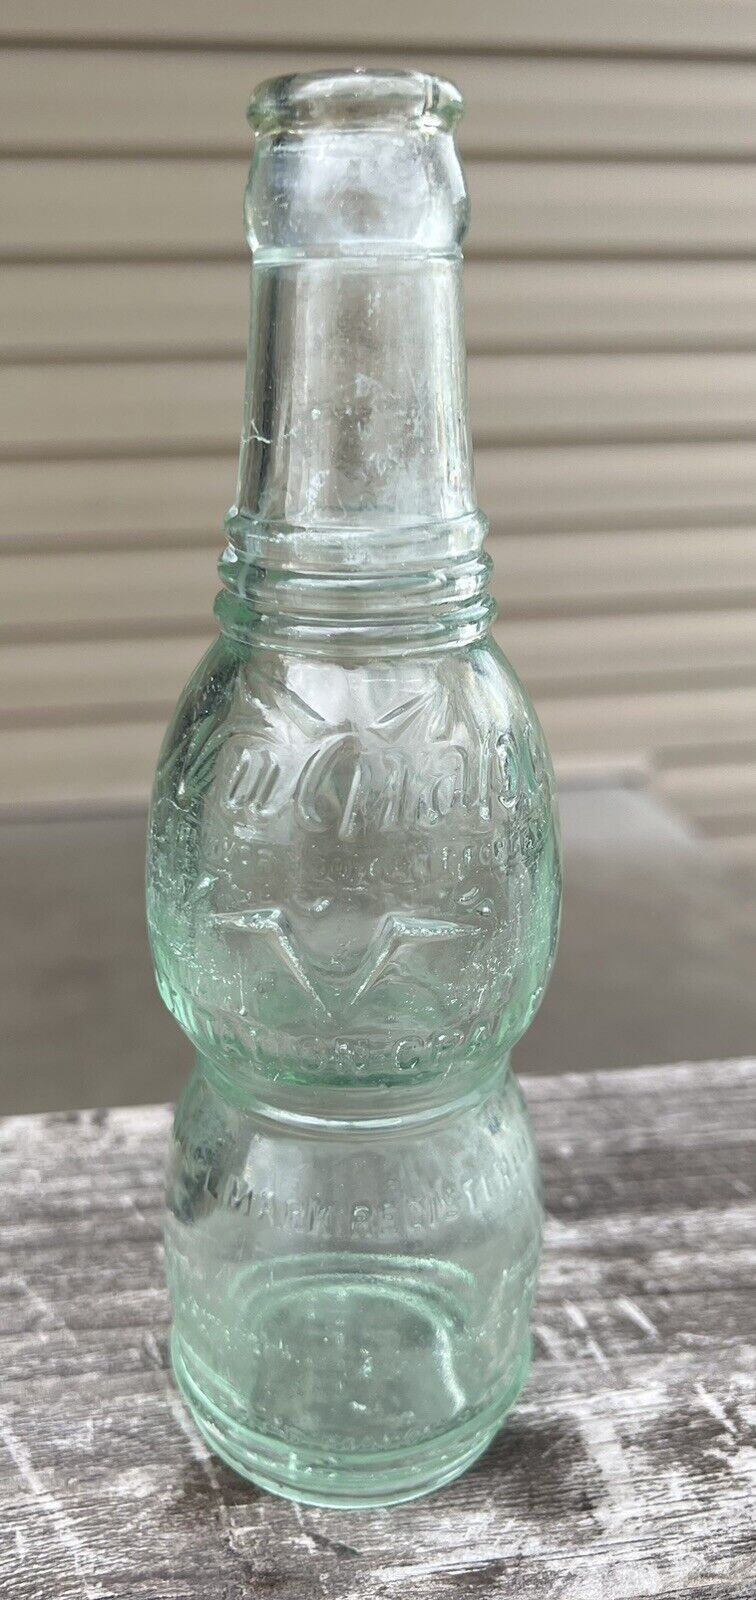 Nugrape 6 oz Embossed Soda Bottle Patent 1920 Green Tint St Louis MO